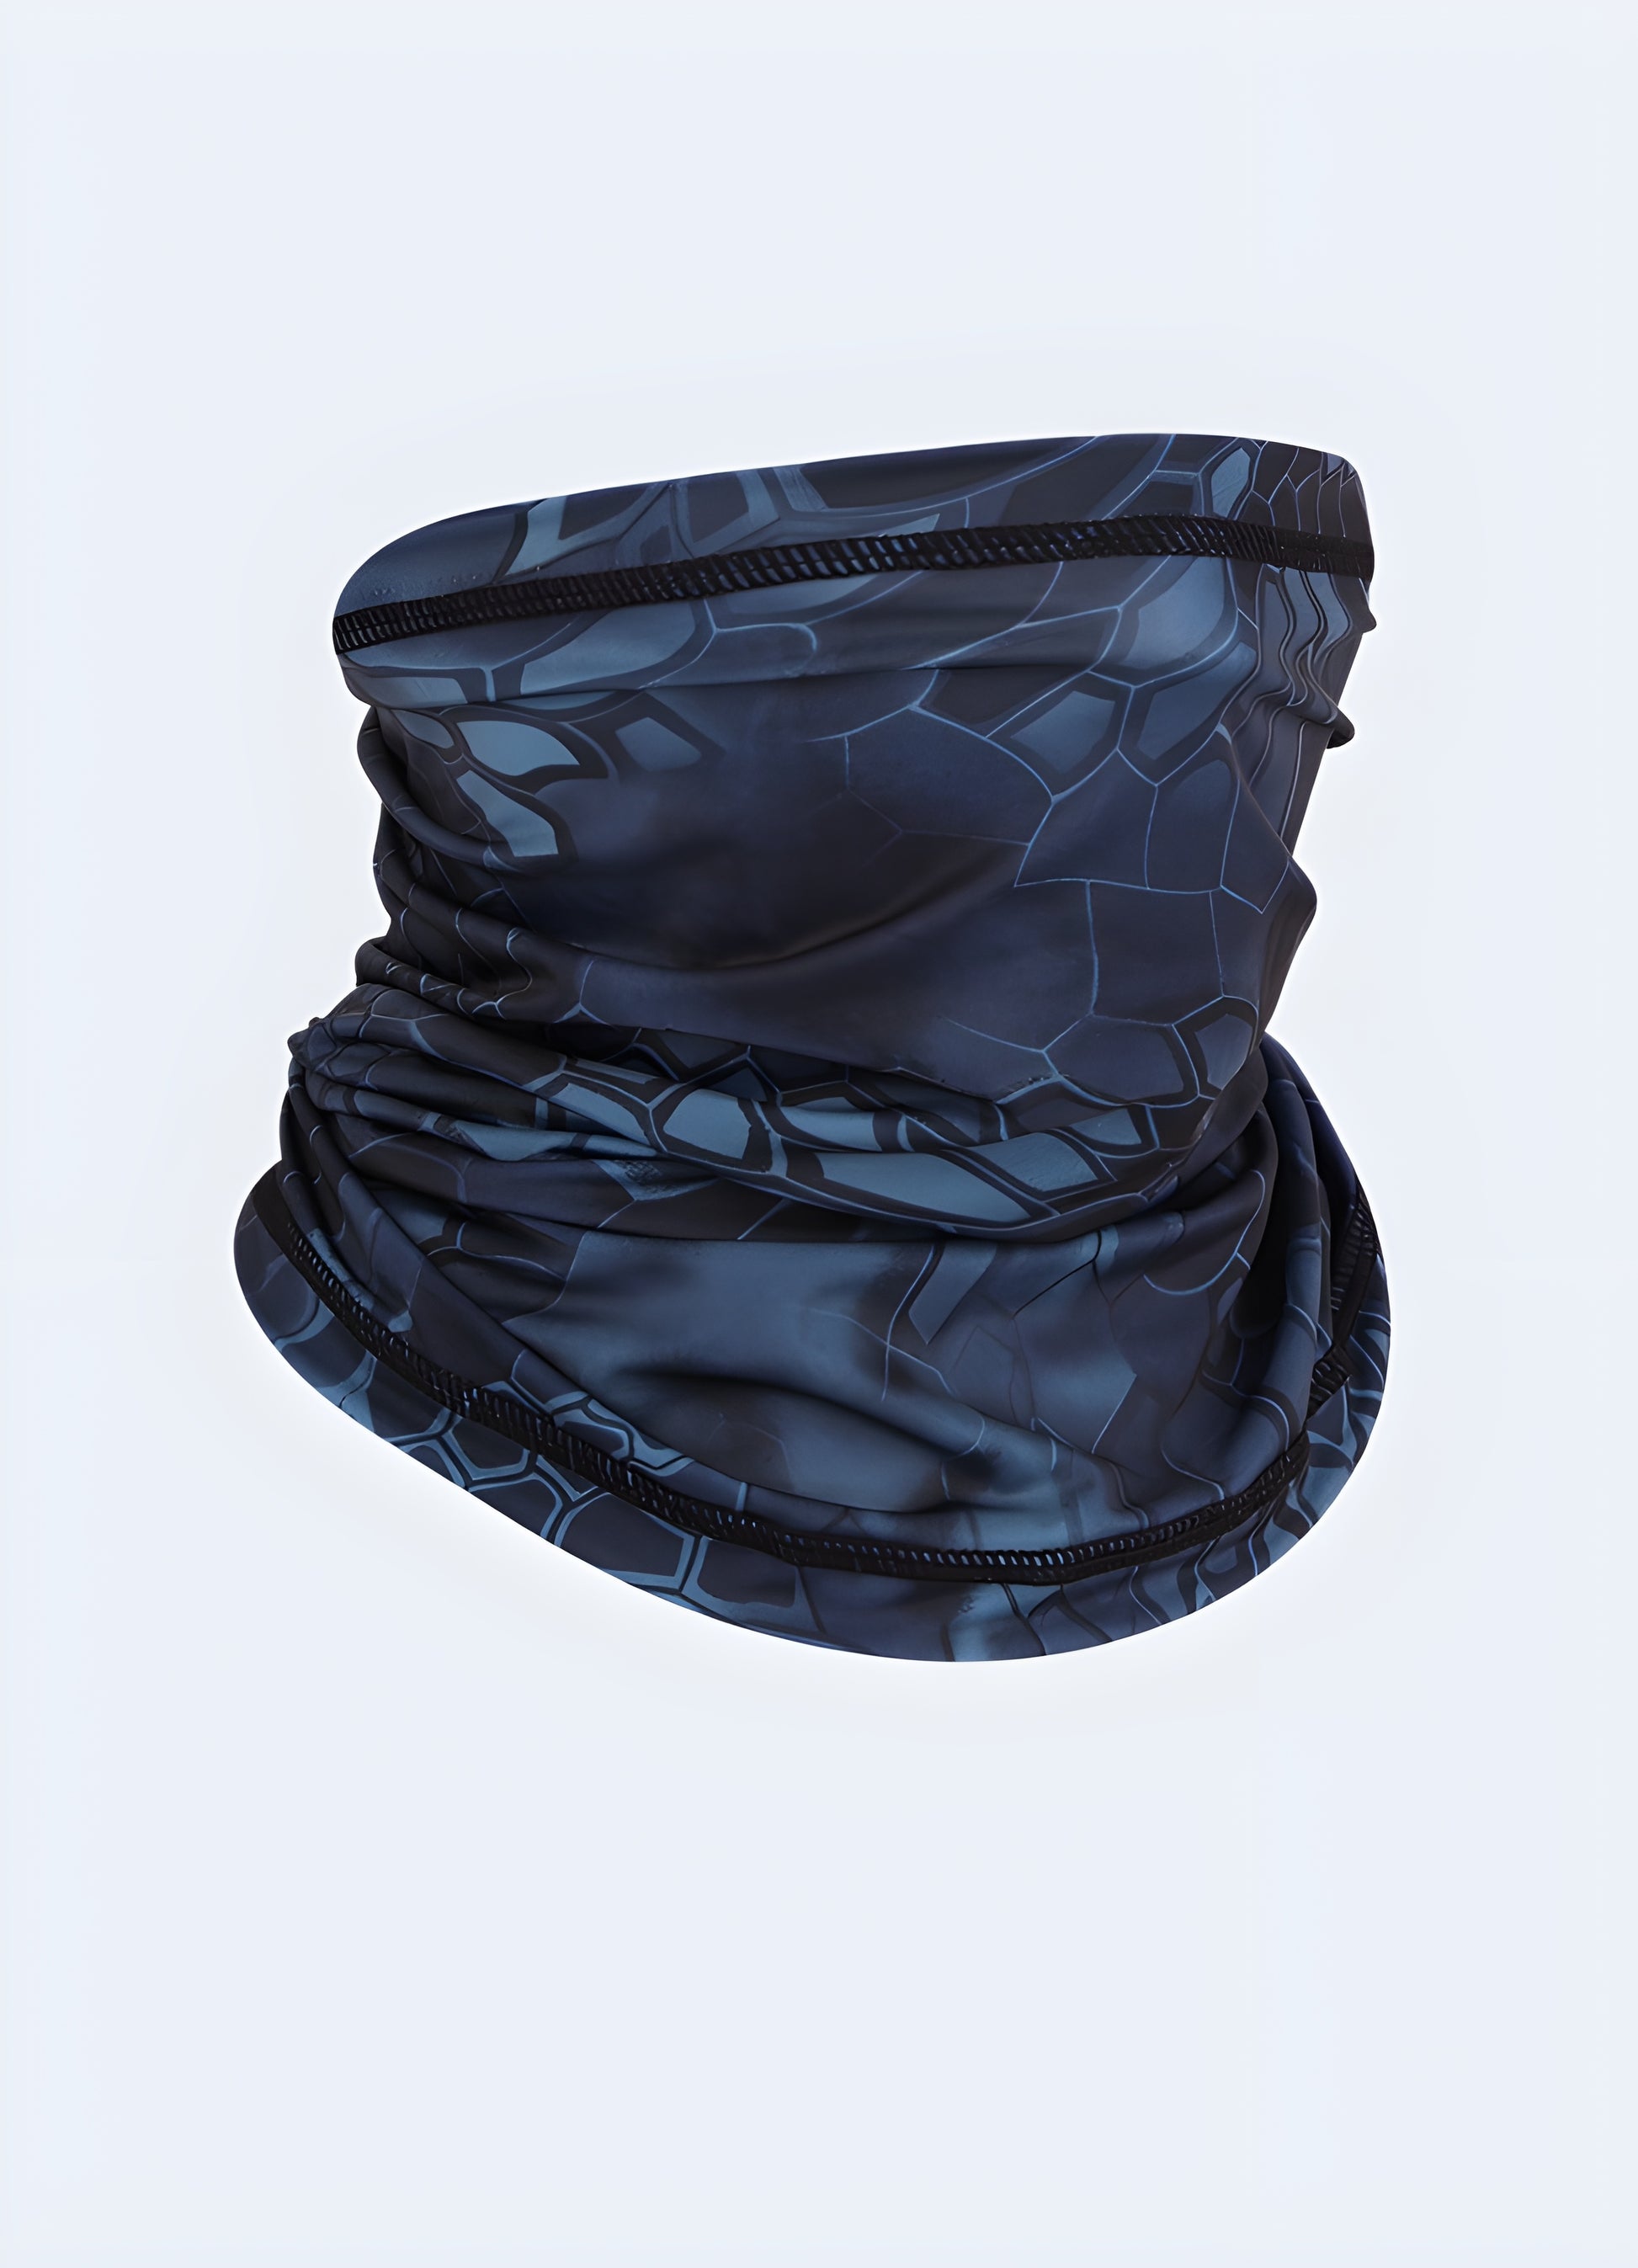  Soft fleece lining for added comfort balaclava half face navy blue camo.